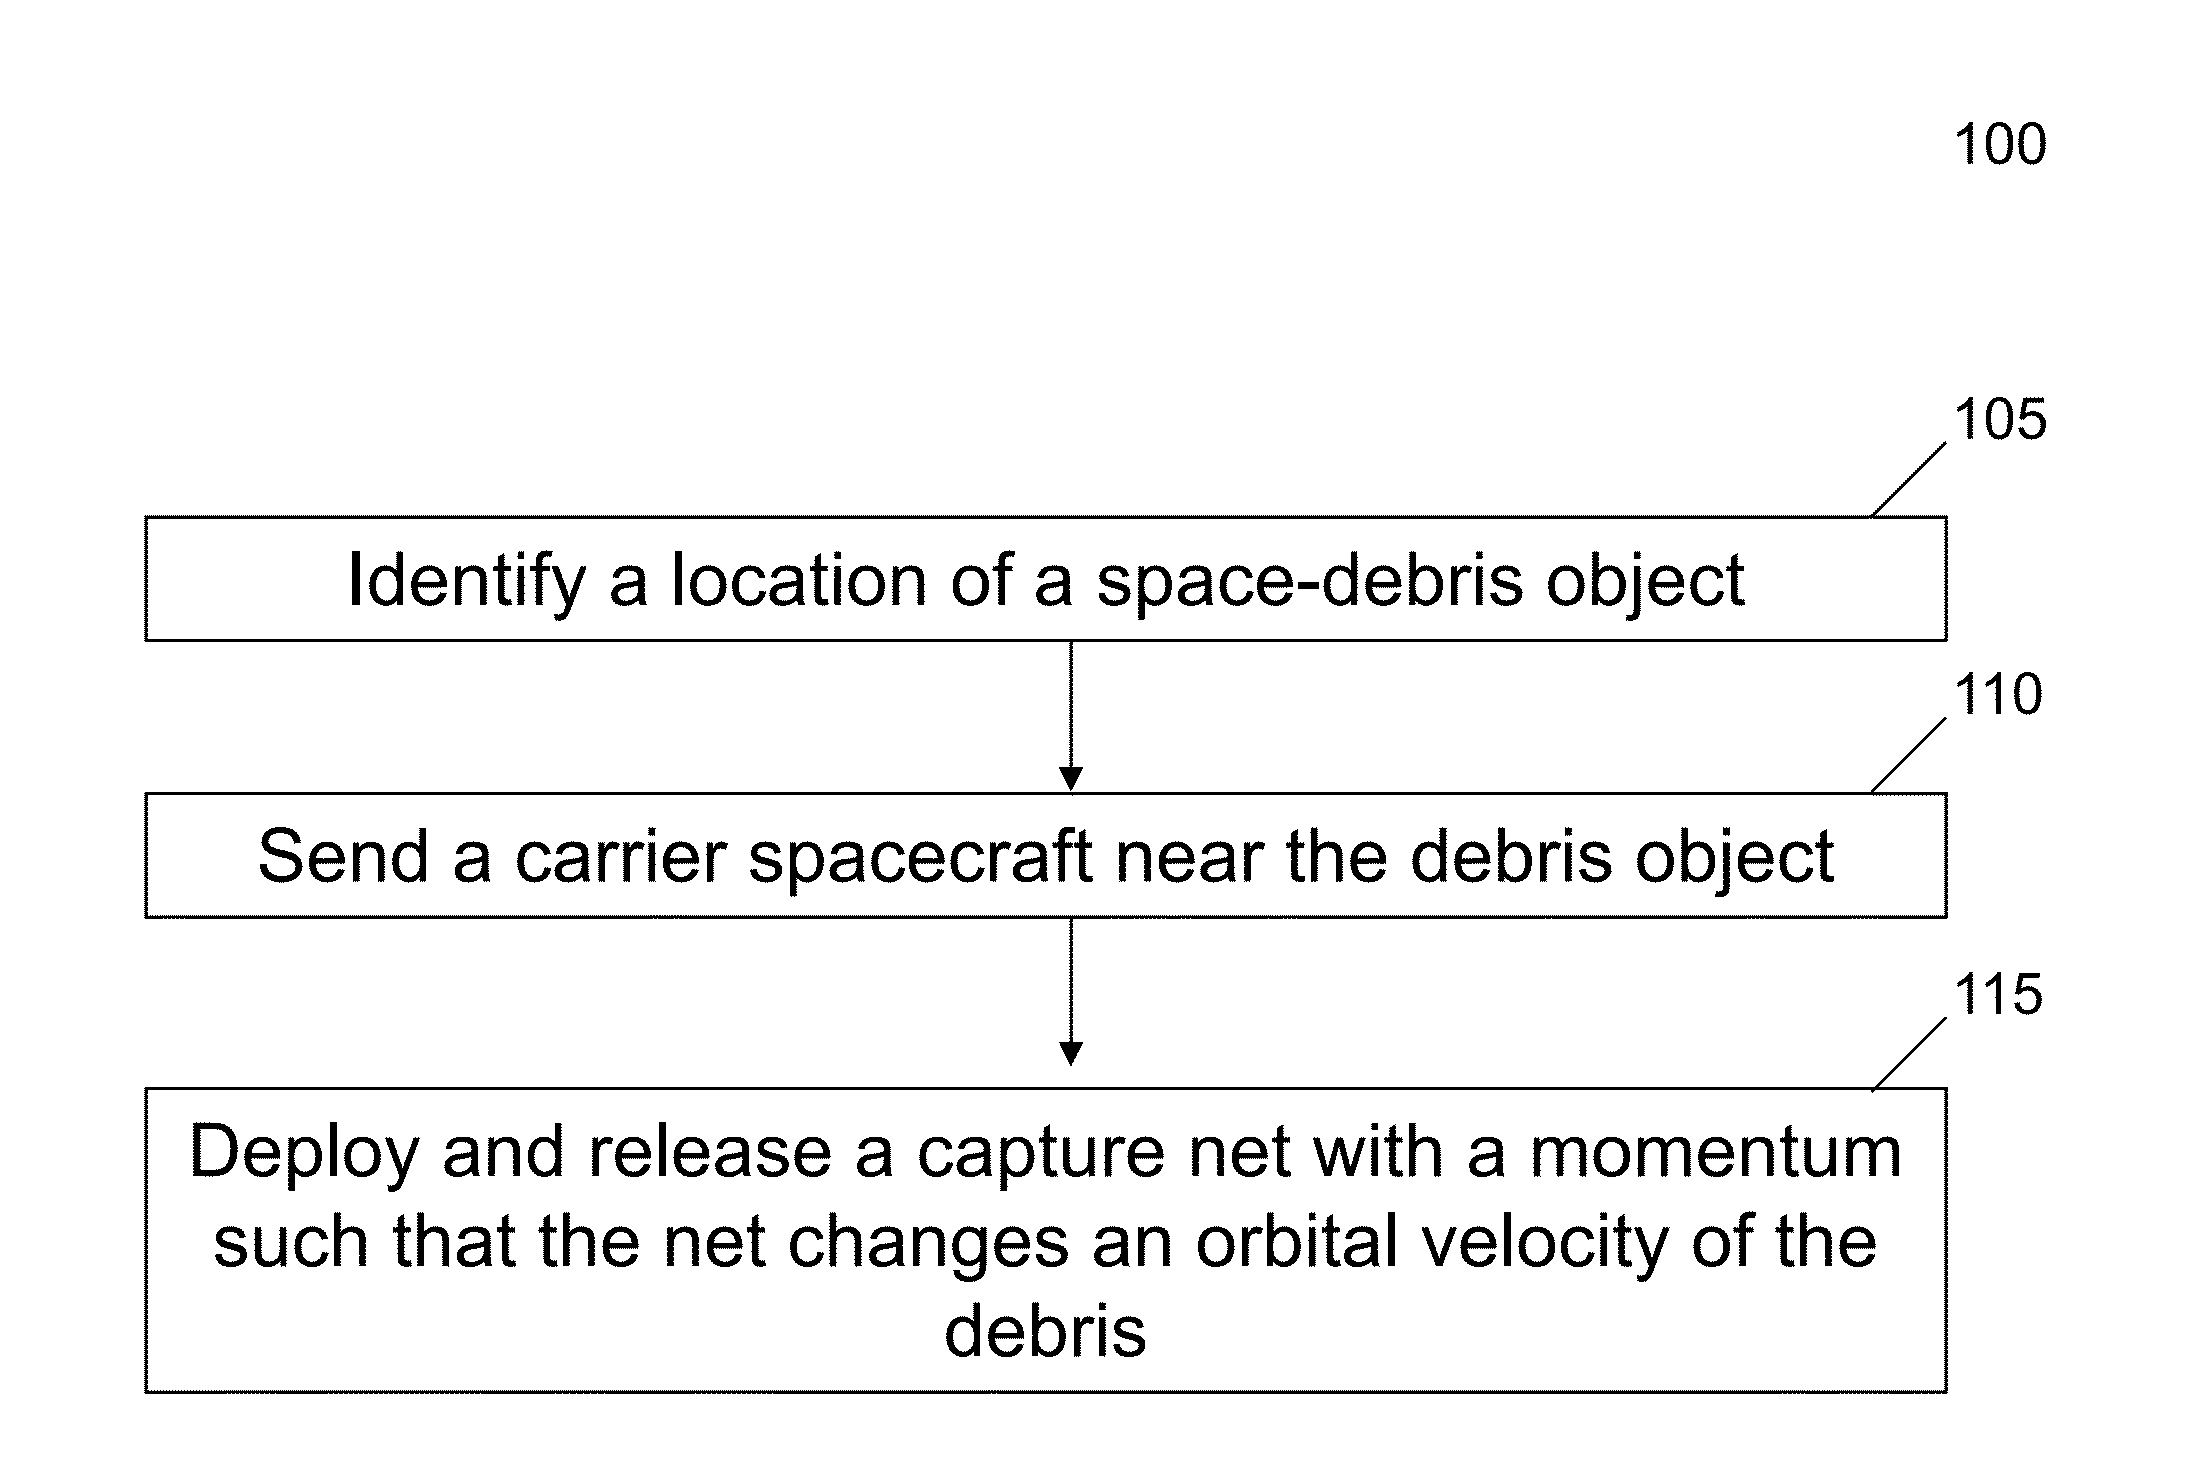 Method for removing orbital objects from orbit using a capture net for momentum transfer